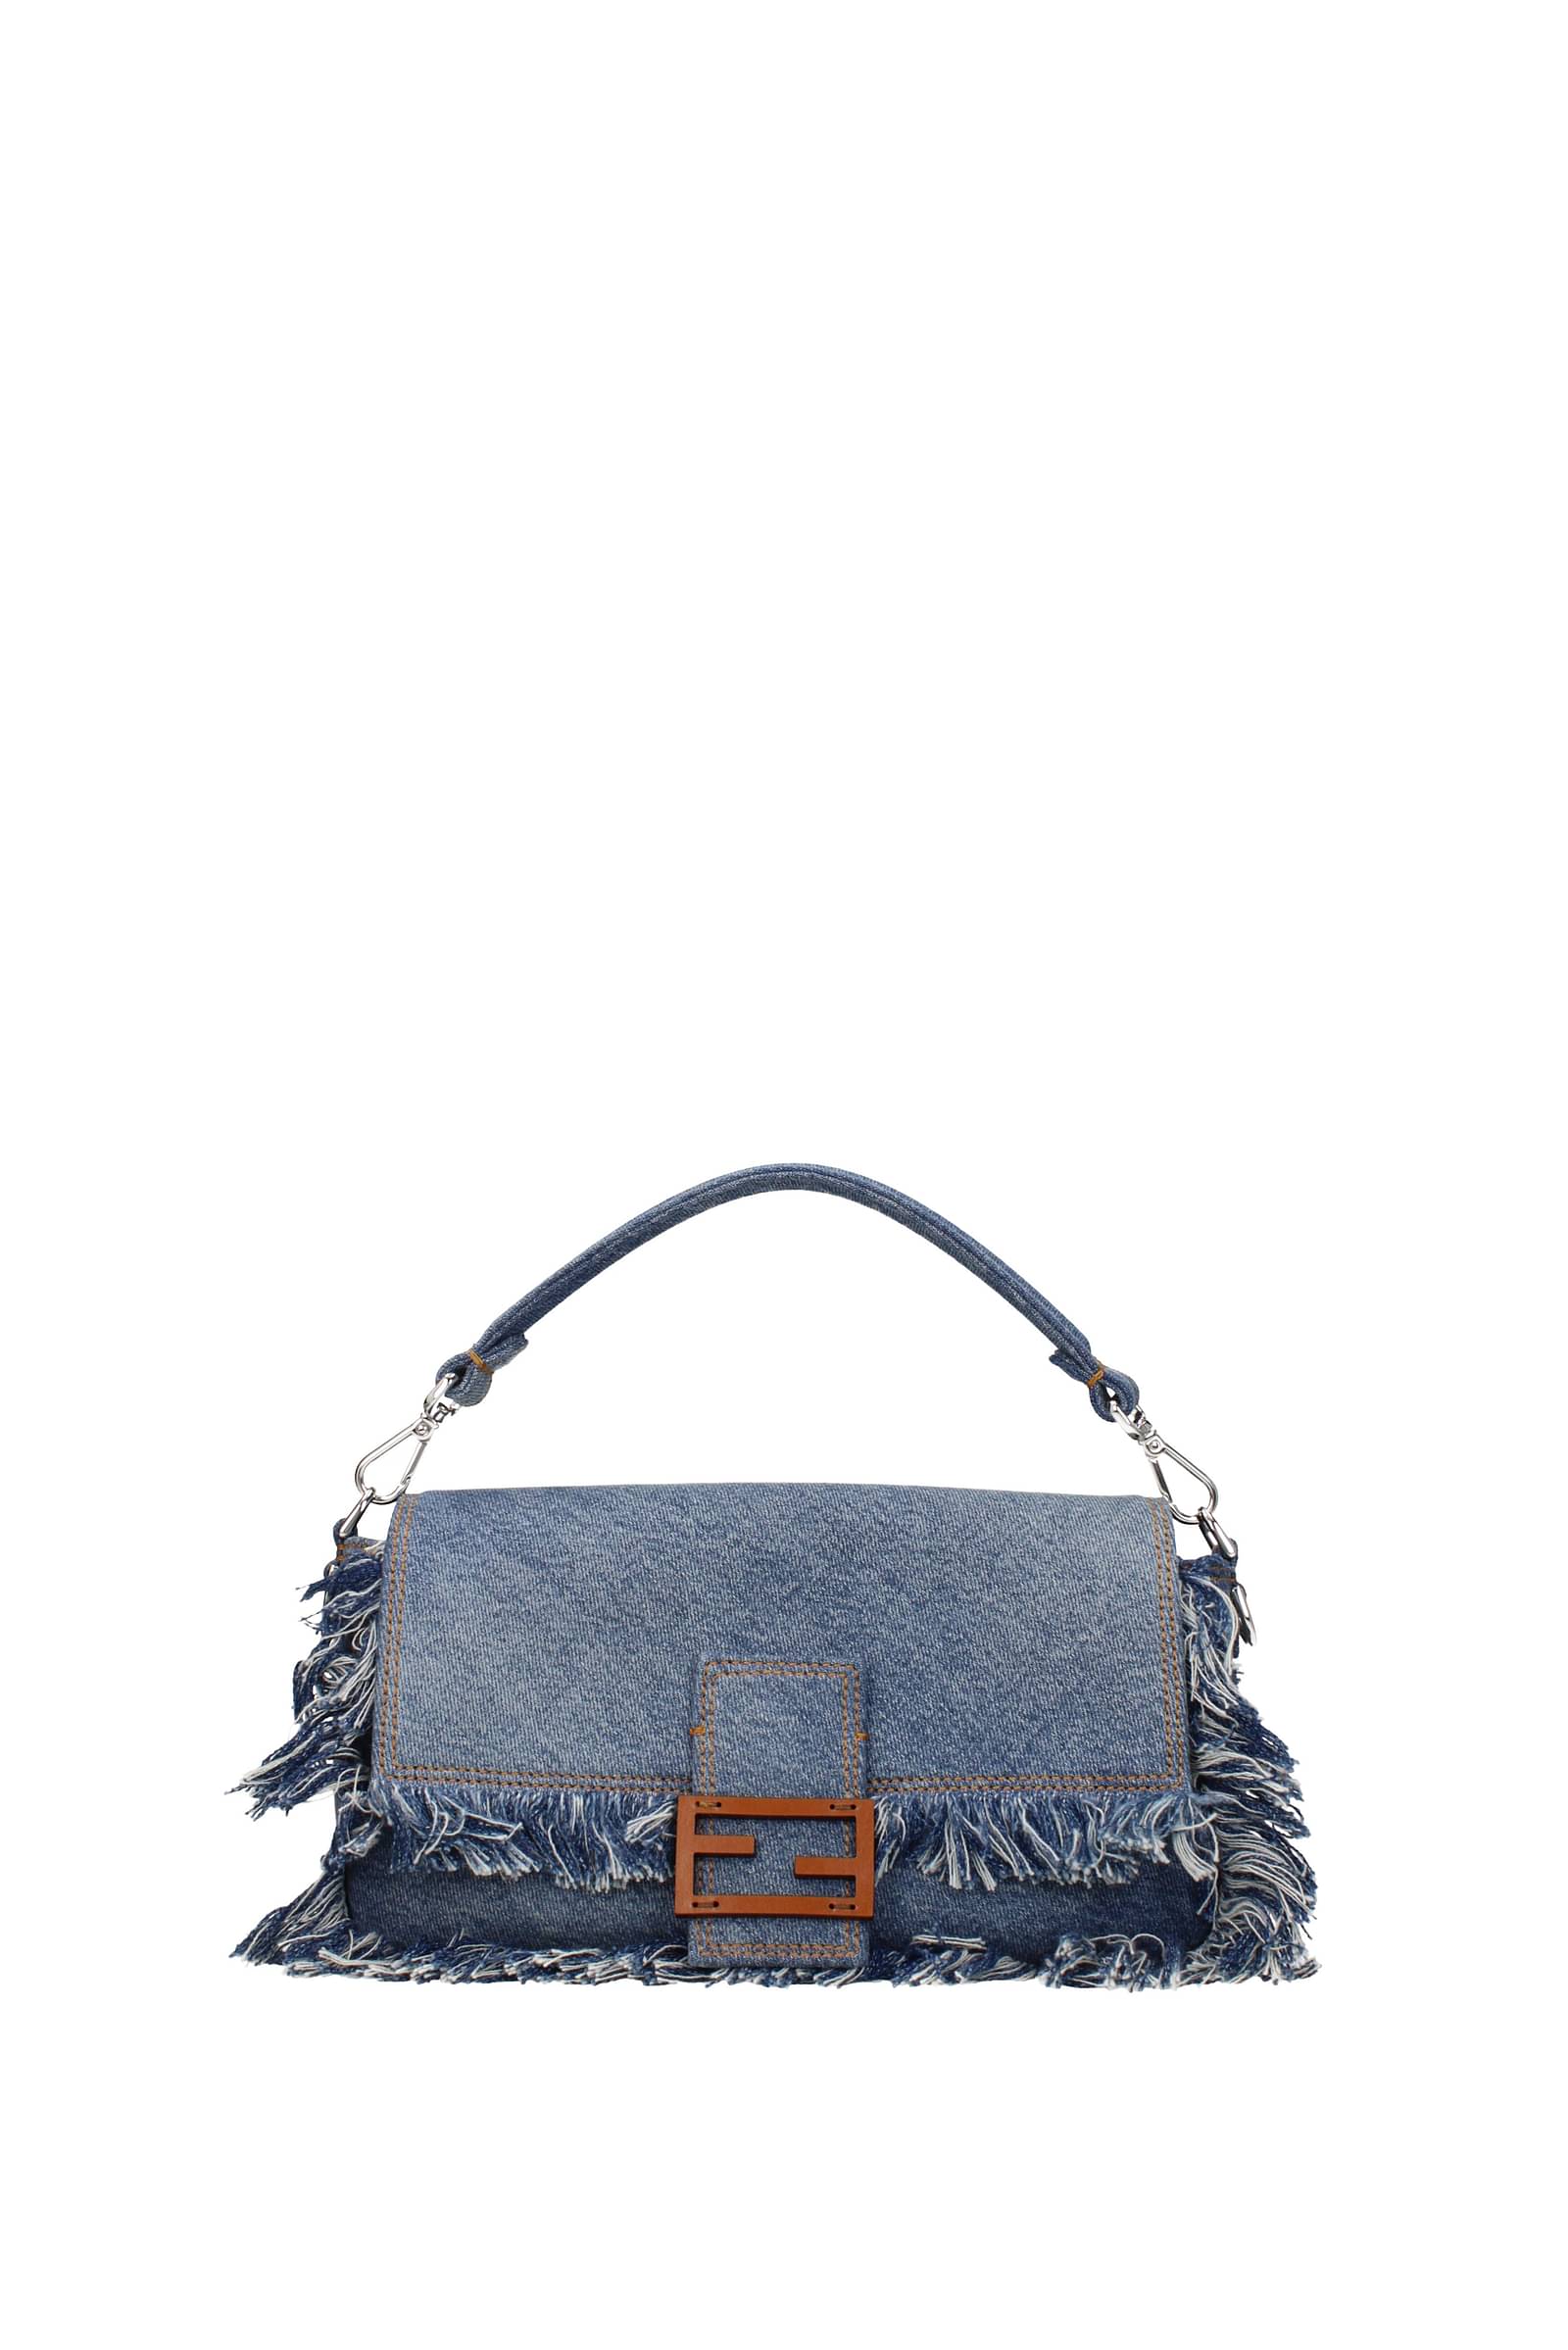 Fendi zucca square vintage bag .Unisex 👫 Detachable and adjustable strap  .Clean | Vintage bags, Bags, Vintage fendi bag